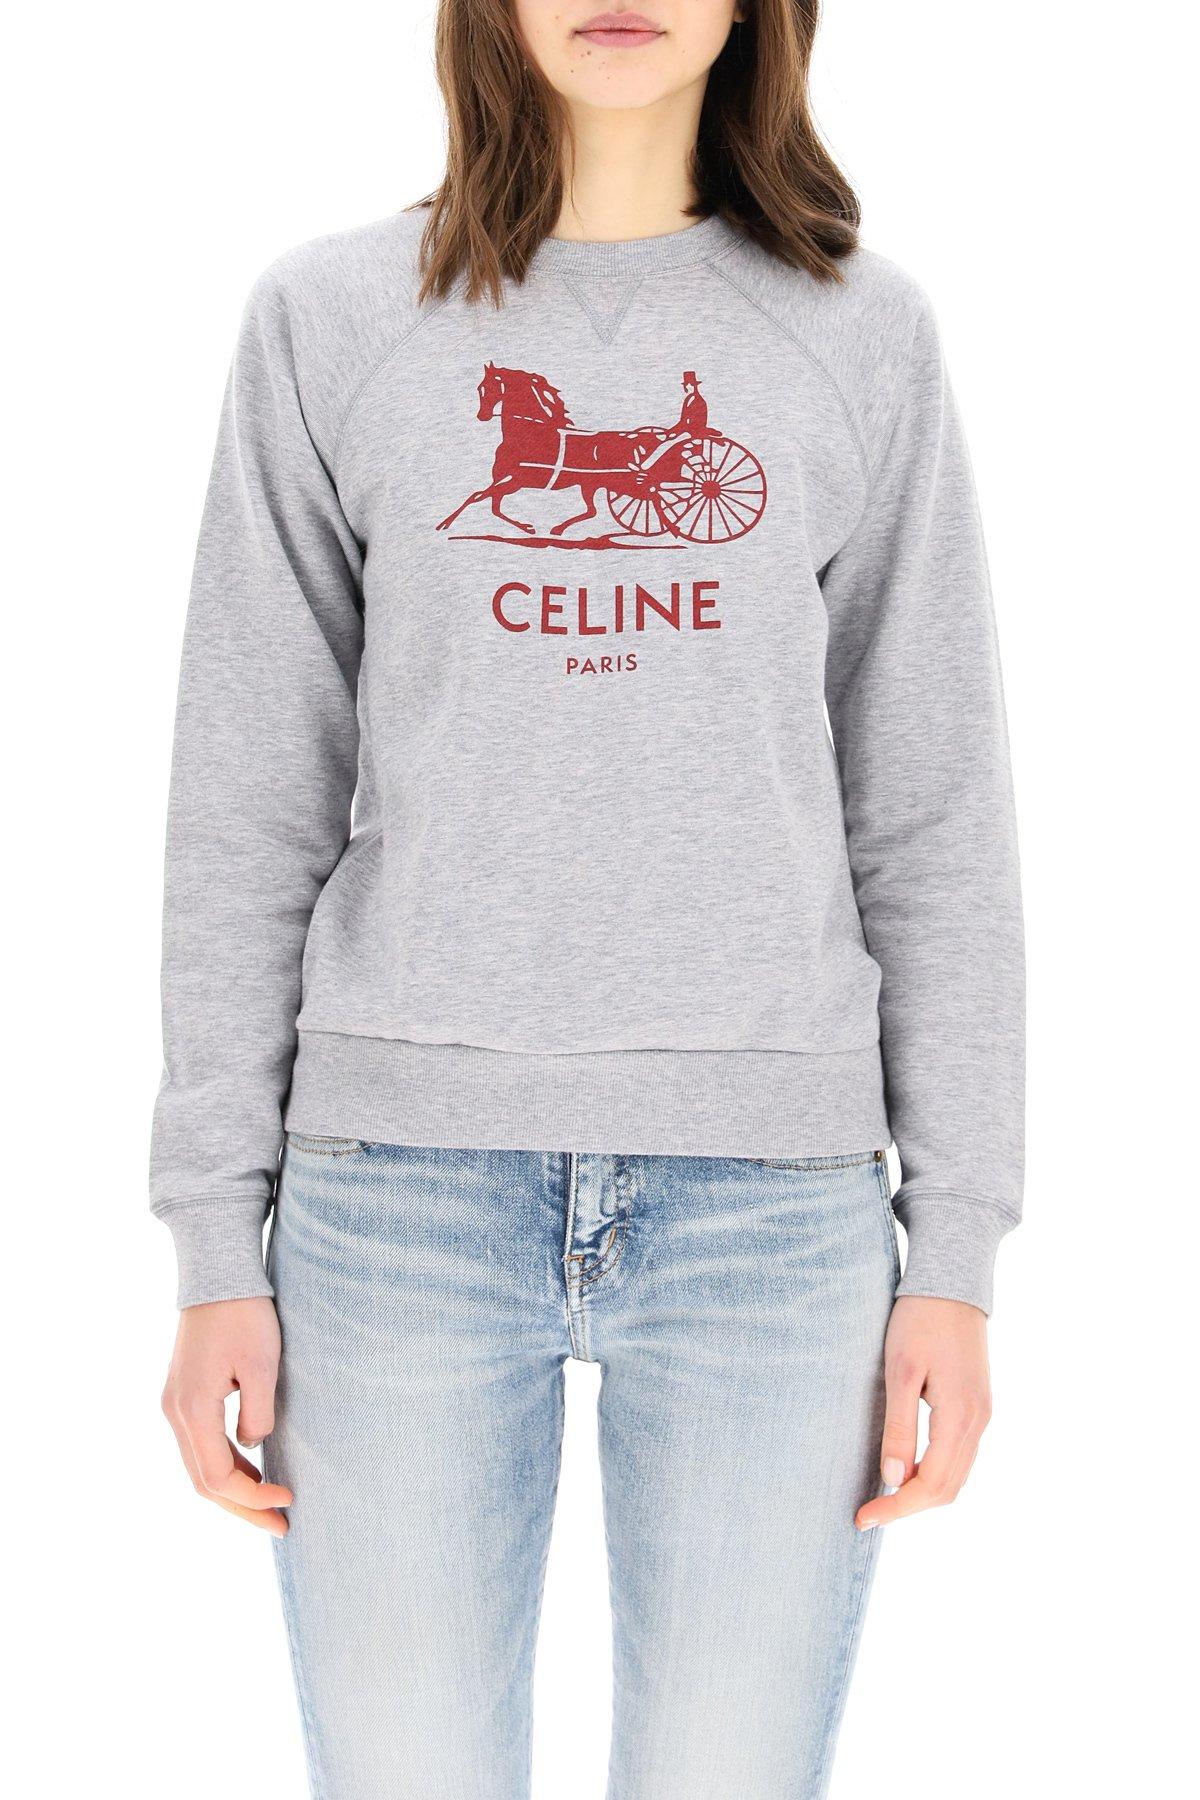 Celine Cashmere Sulky Print Sweatshirt in Gray | Lyst